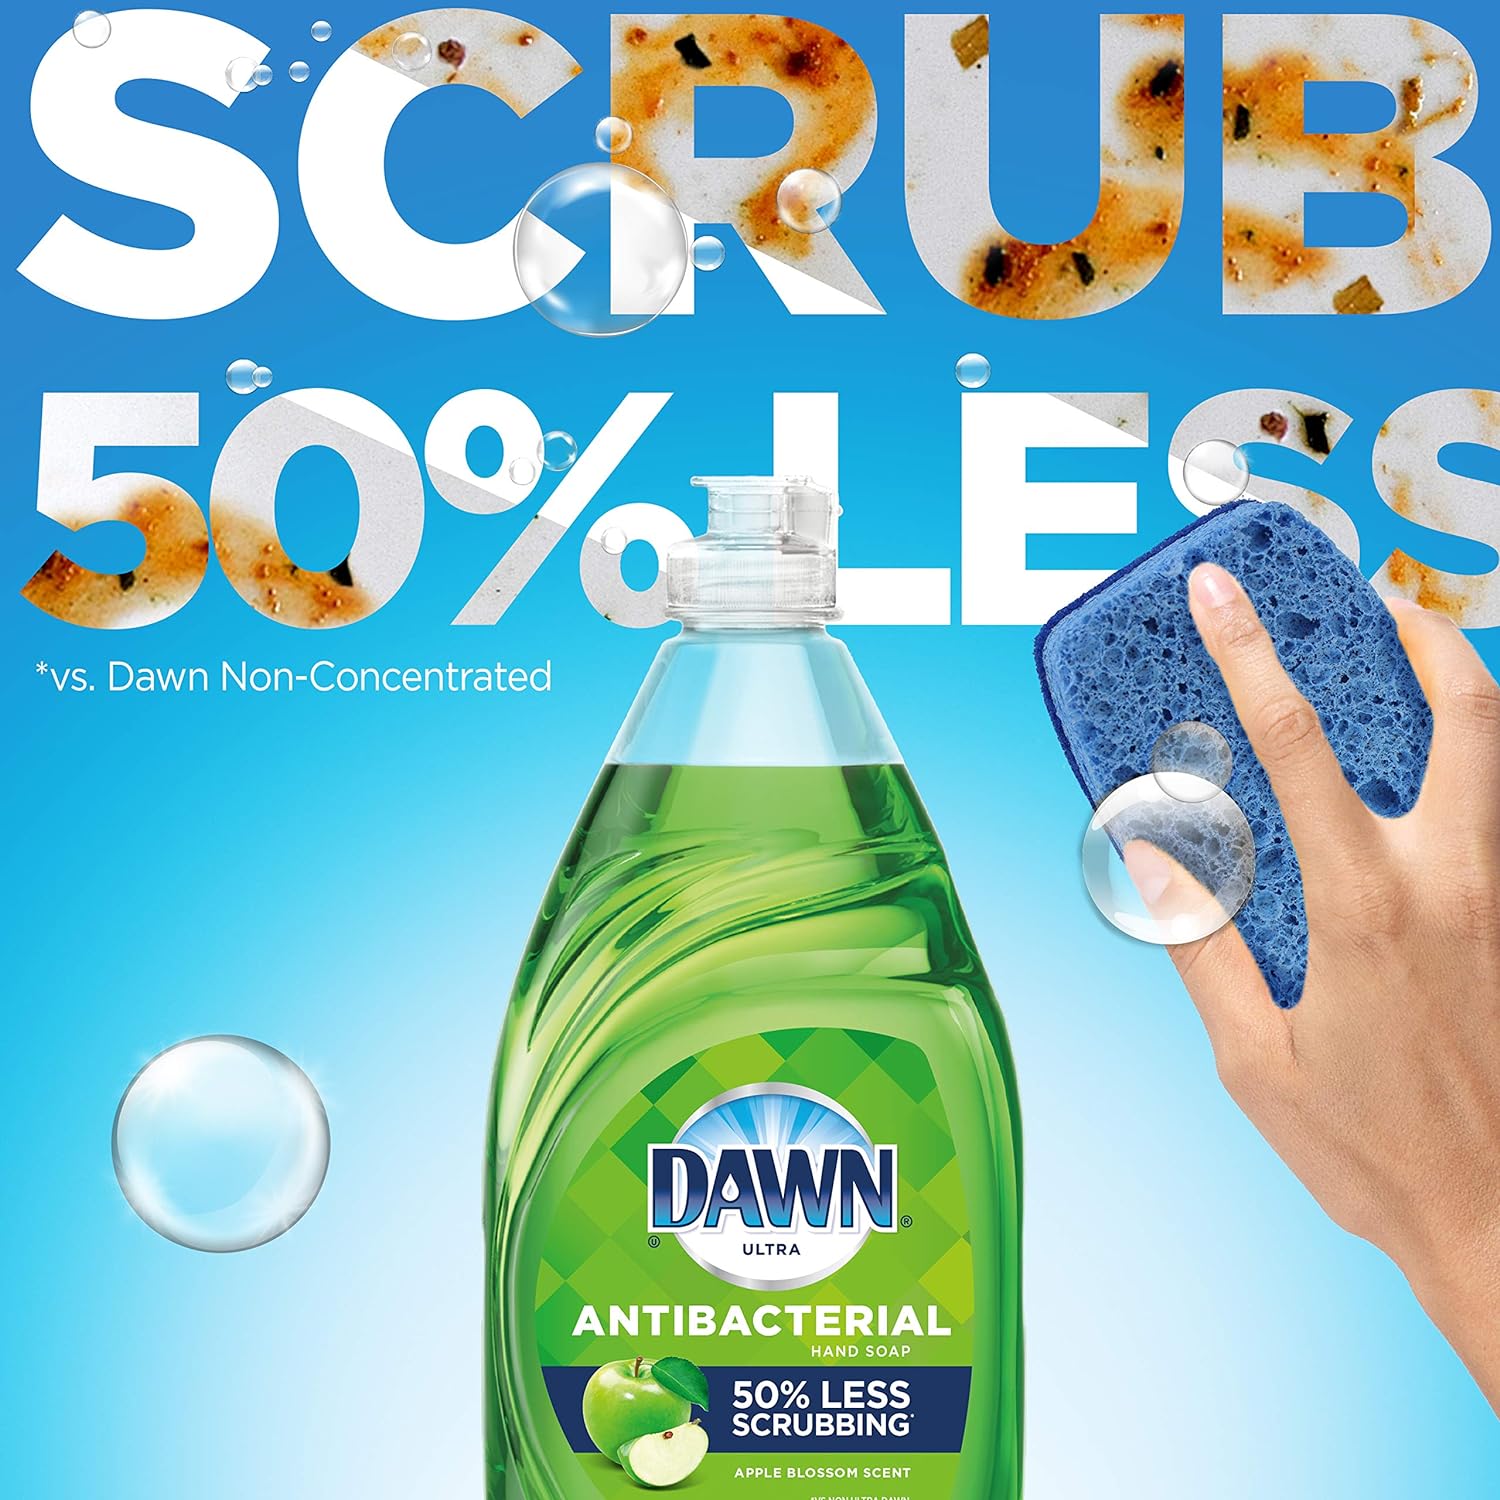 Dawn Ultra Antibacterial Hand Soap, Dishwashing Liquid Dish Soap, Apple Blossom Scent, 19.4 fl oz : Health & Household